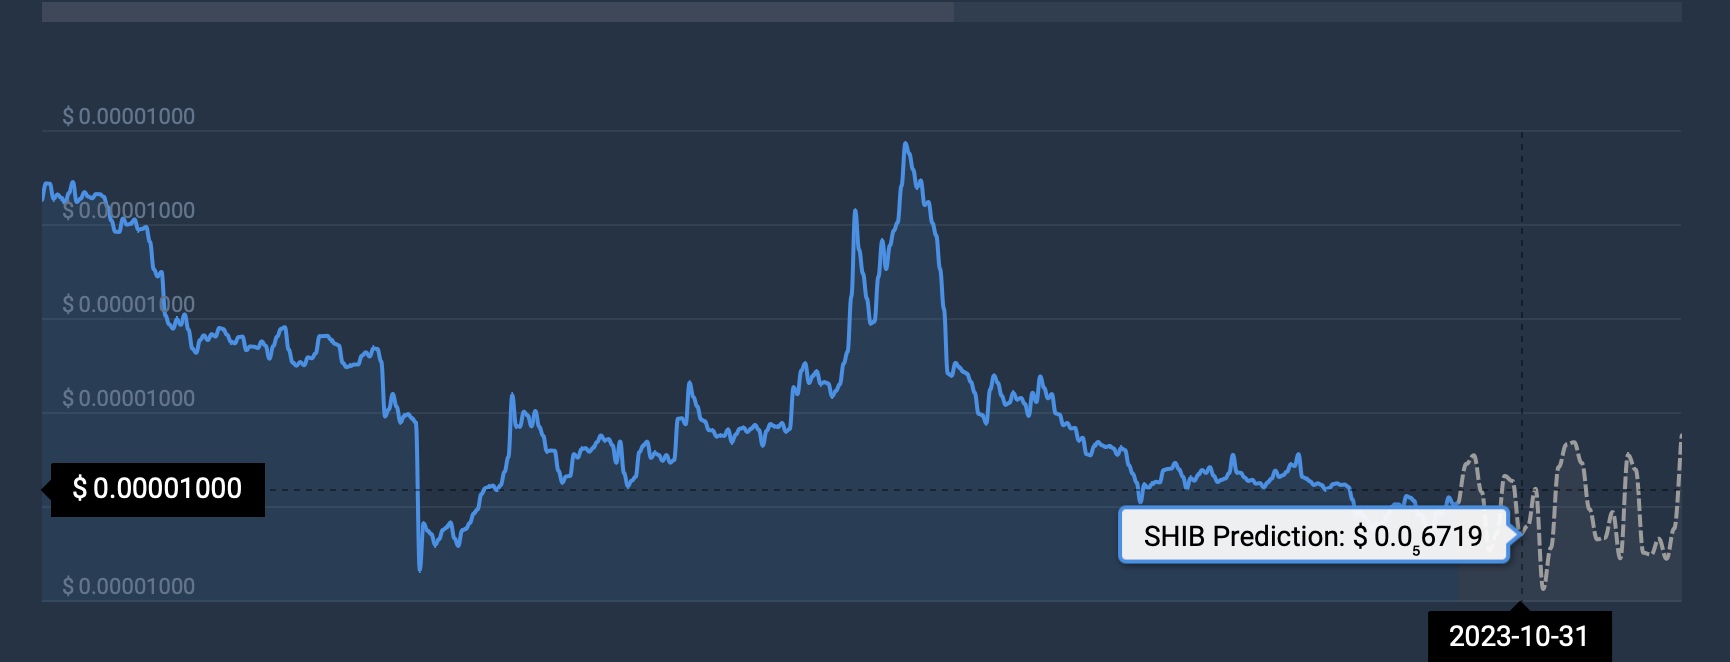 shiba meme coin price analysis chart